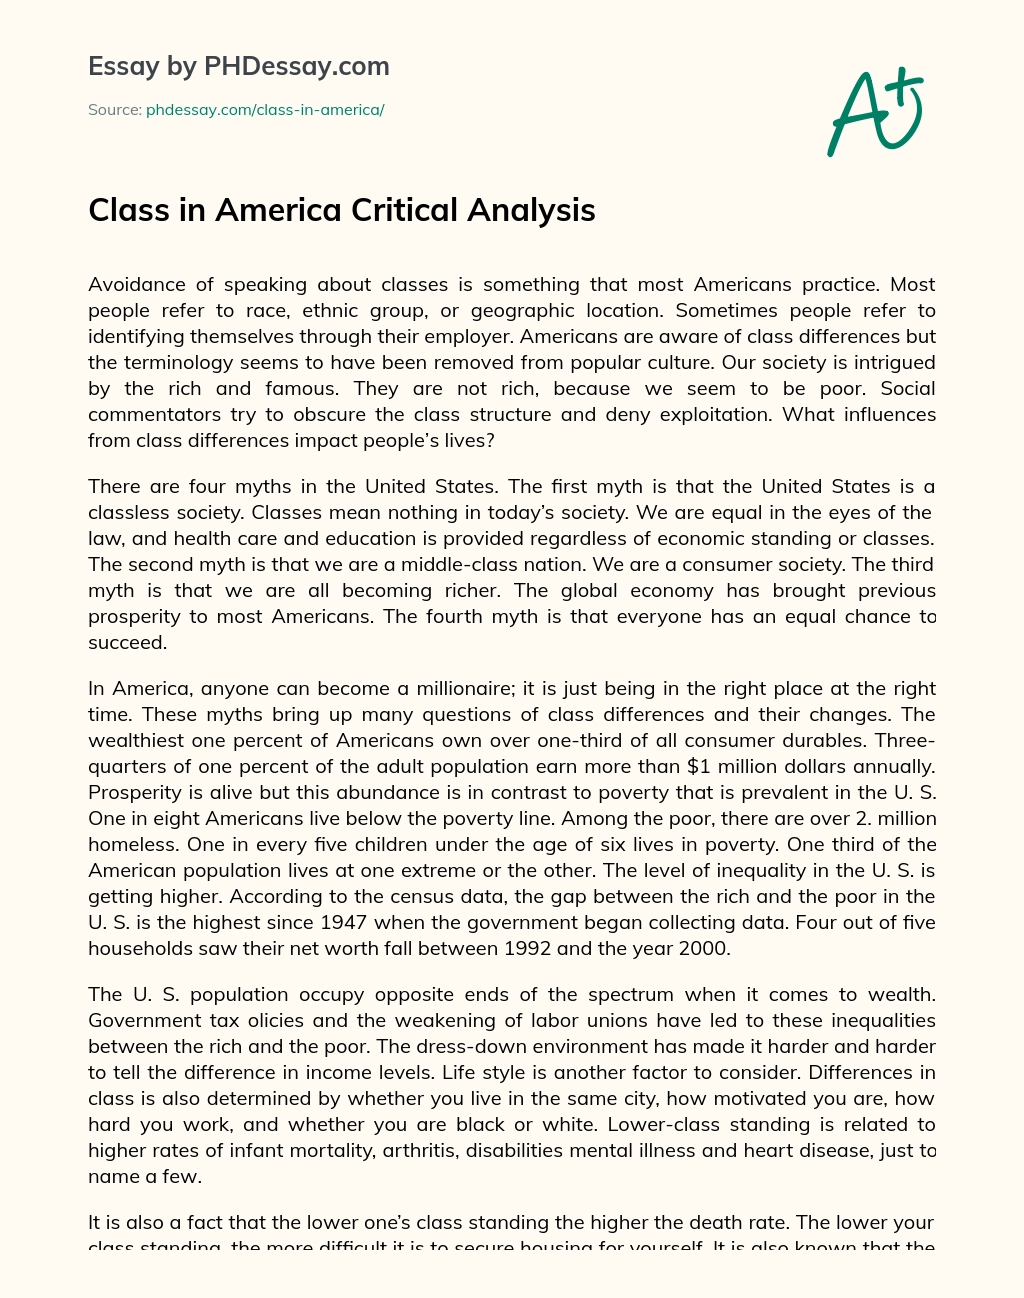 Class in America Critical Analysis essay